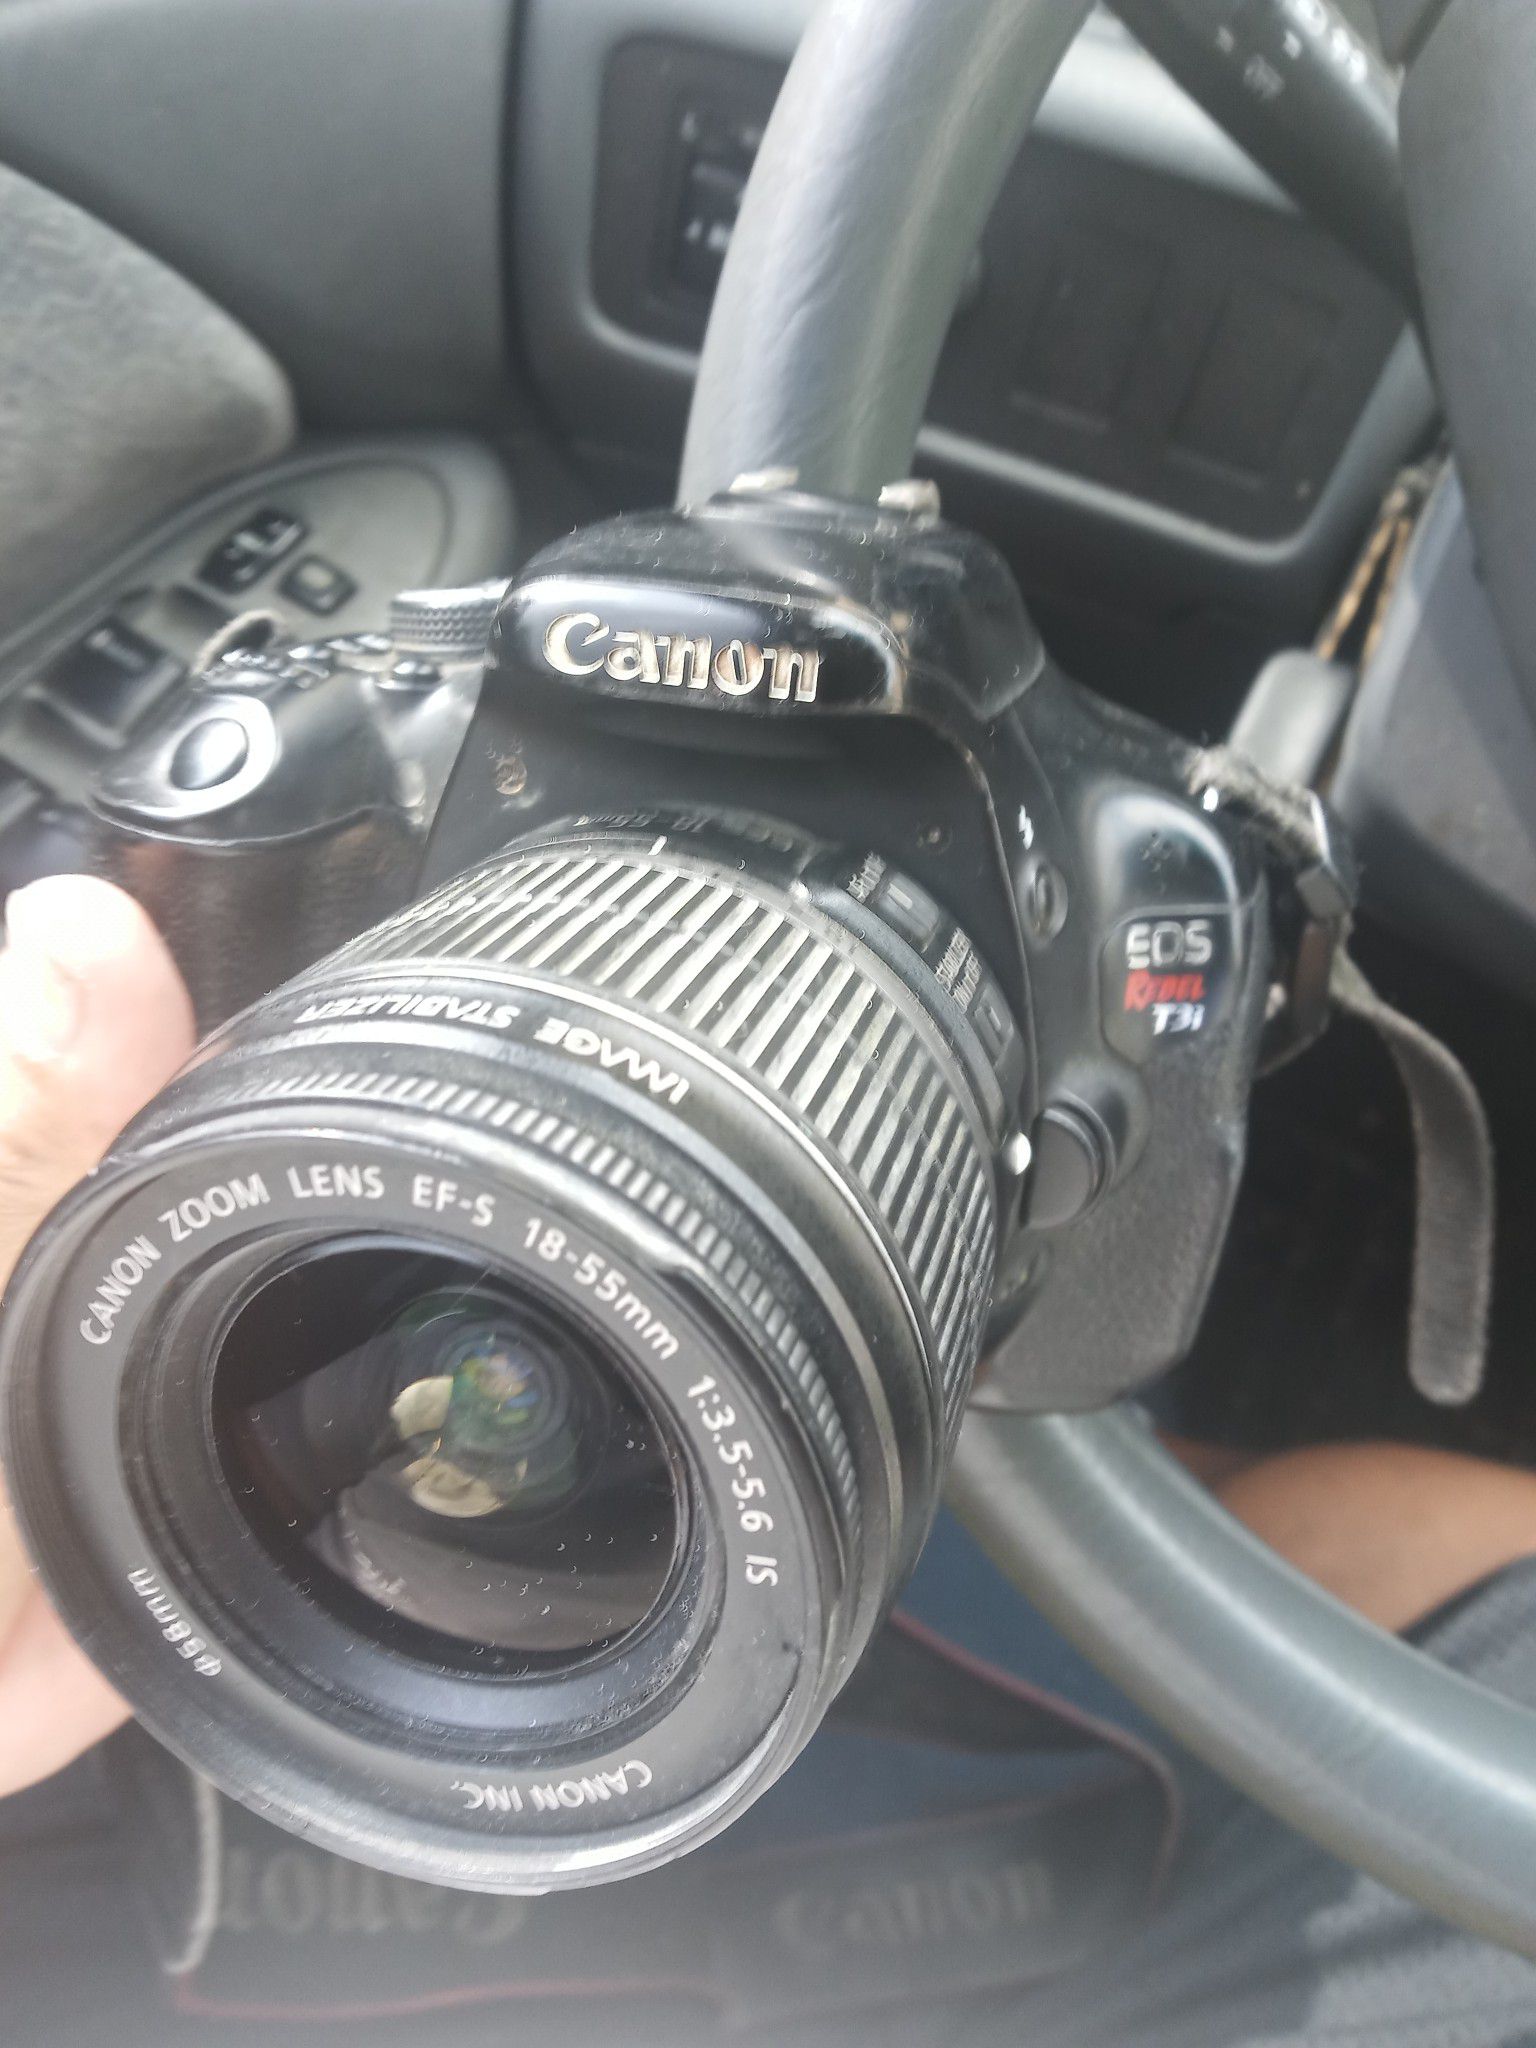 Canon t3i digital camera with Canon lens